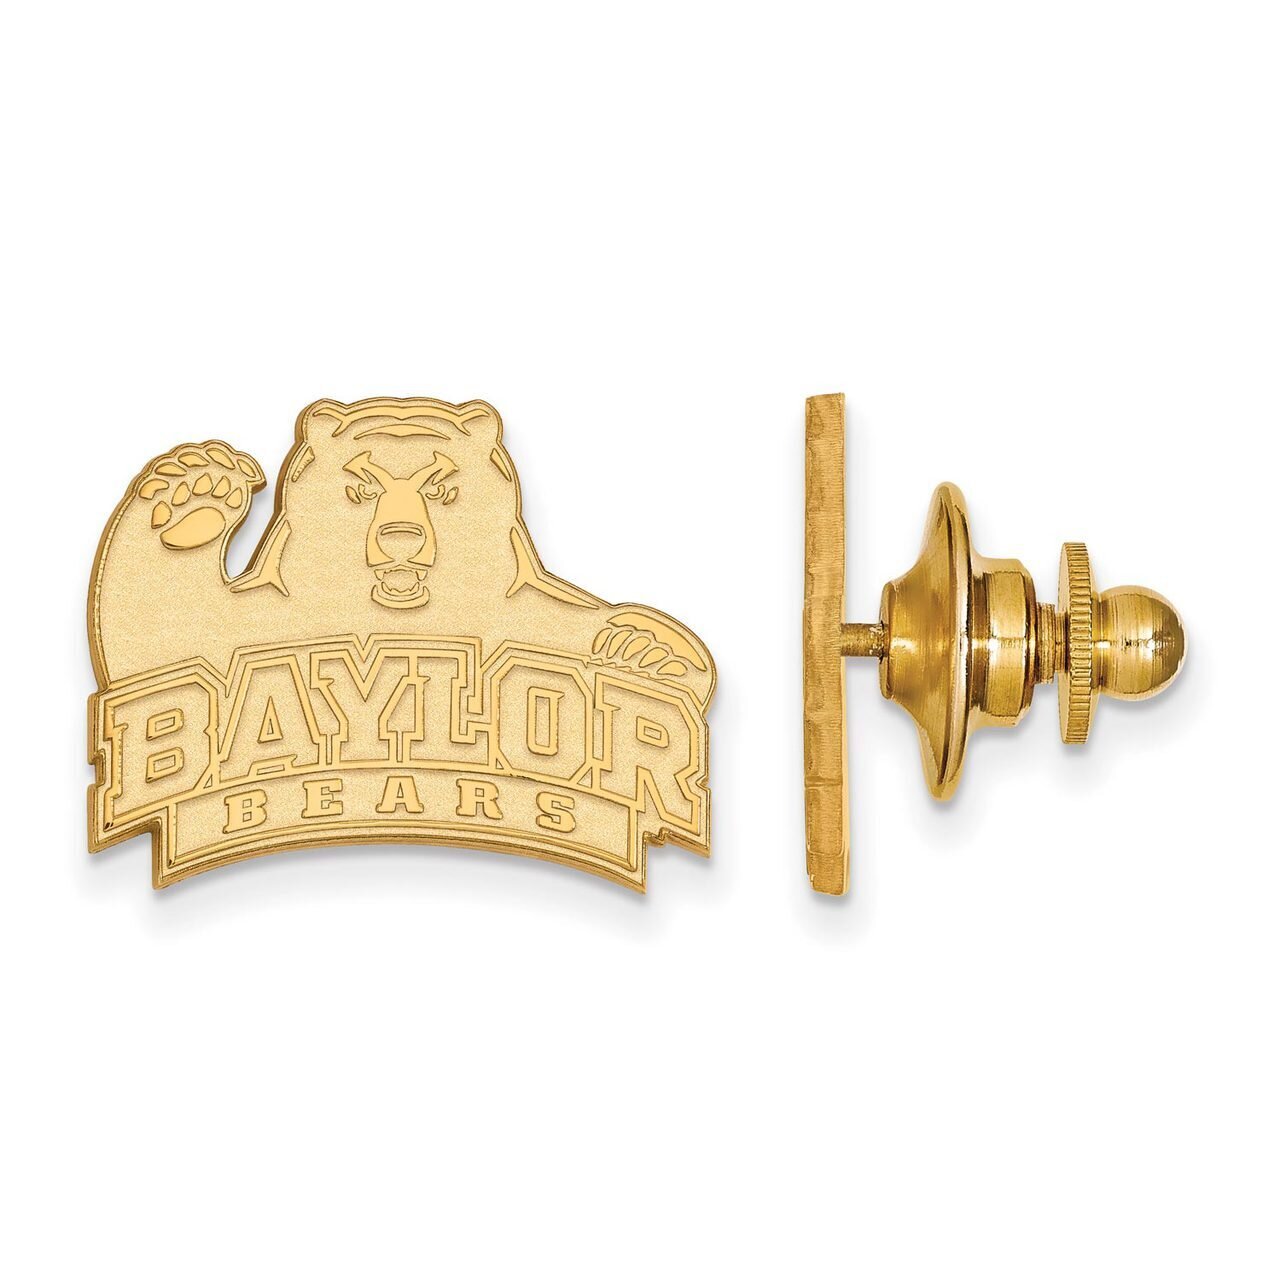 Baylor University Lapel Pin Gold-plated Silver GP010BU